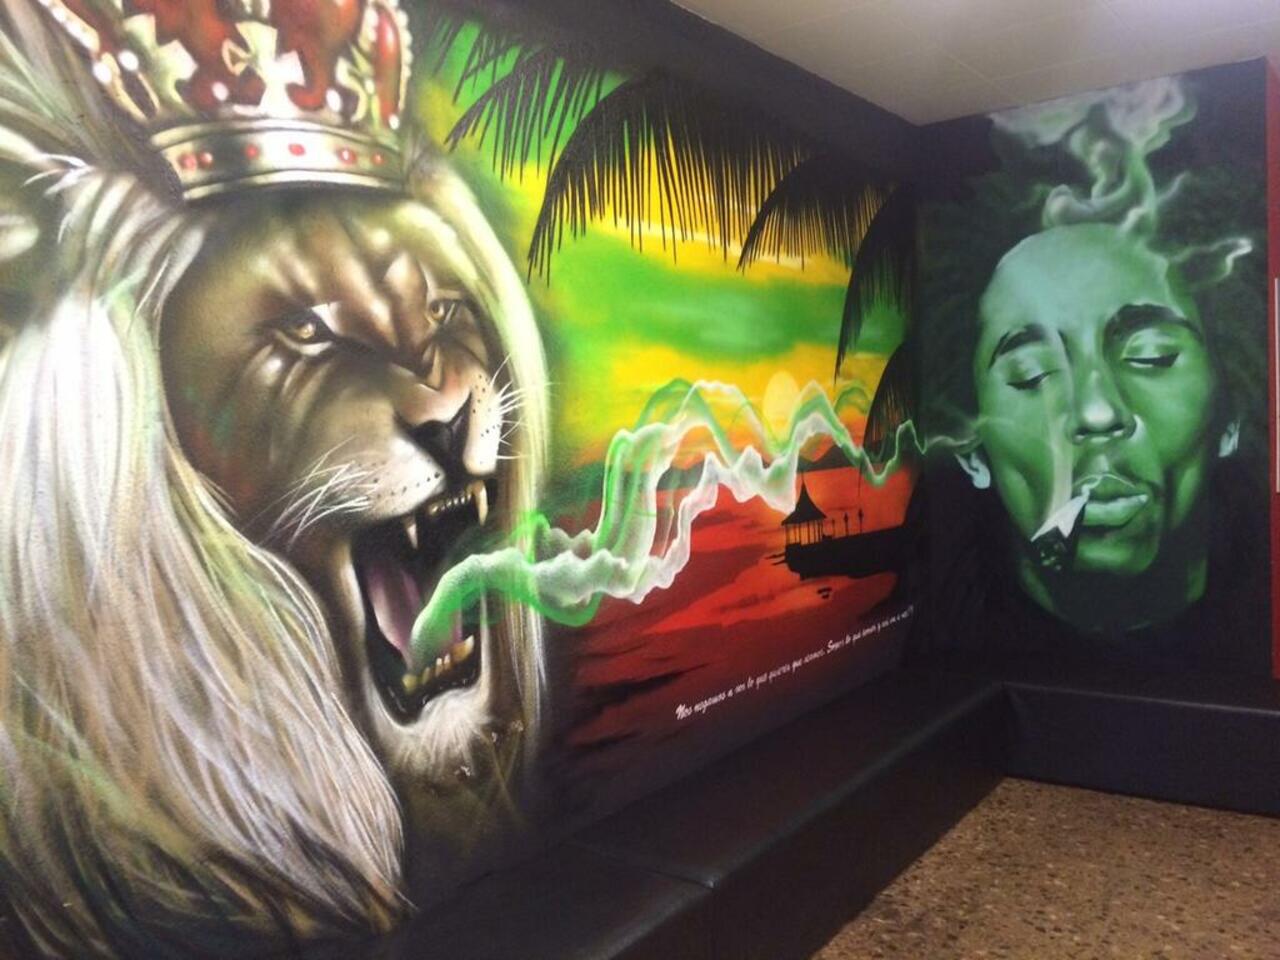 RolliCavs: RT Berokone: #graffiti  #leon #mural #cannabis #kingstone #berok #art #arts #dibujo #animal #urbanwalls… http://t.co/bJAVzzcBwk